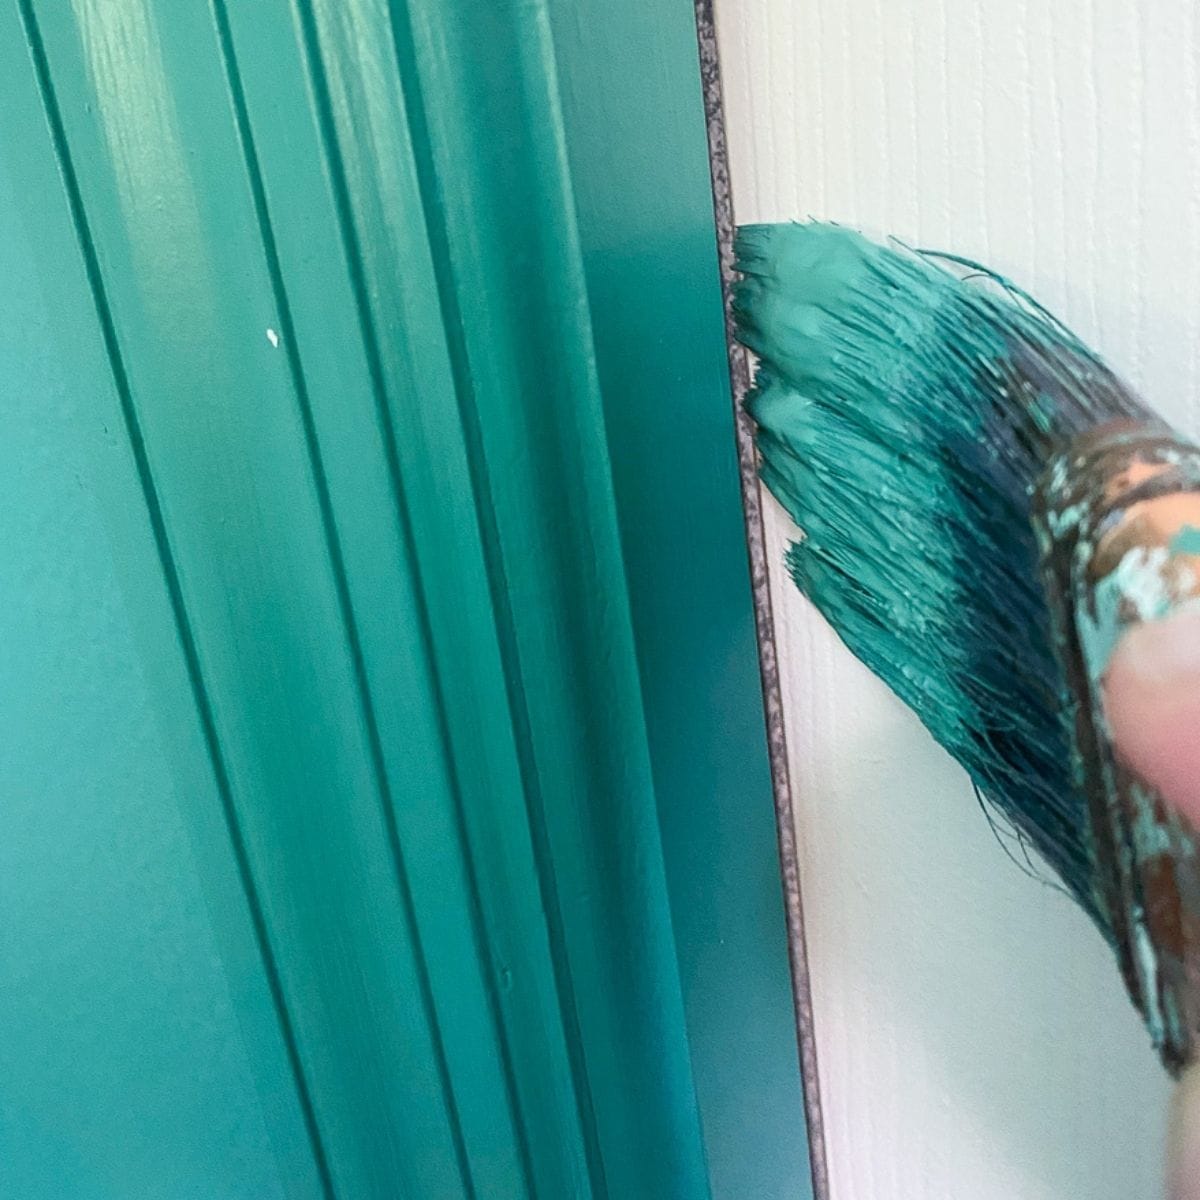 paint brush painting edge of pocket door